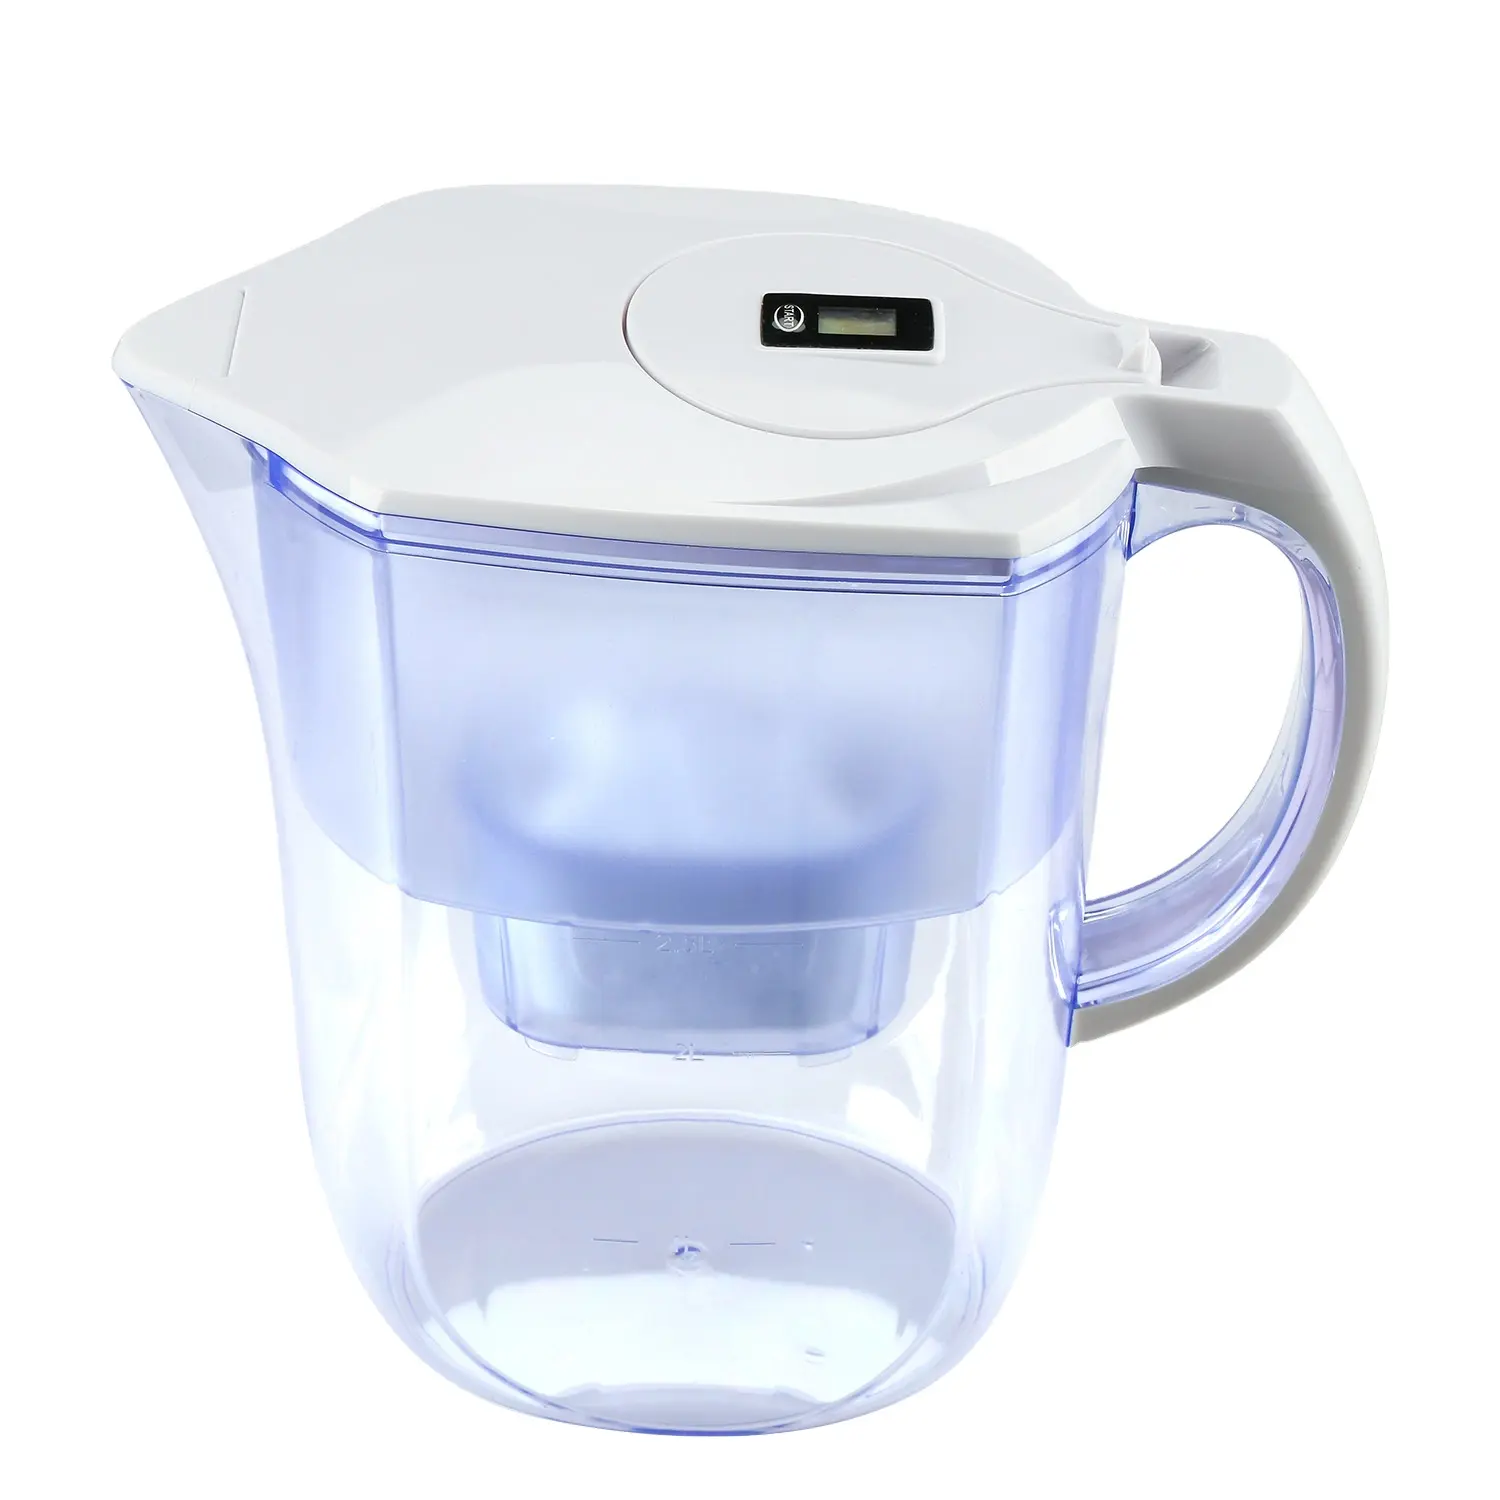 Filtro alcalino de água 3.8l, filtro de água, alcalino, doméstico, mineral, jarra para balcão, purificador de água, gerador de hidrogênio